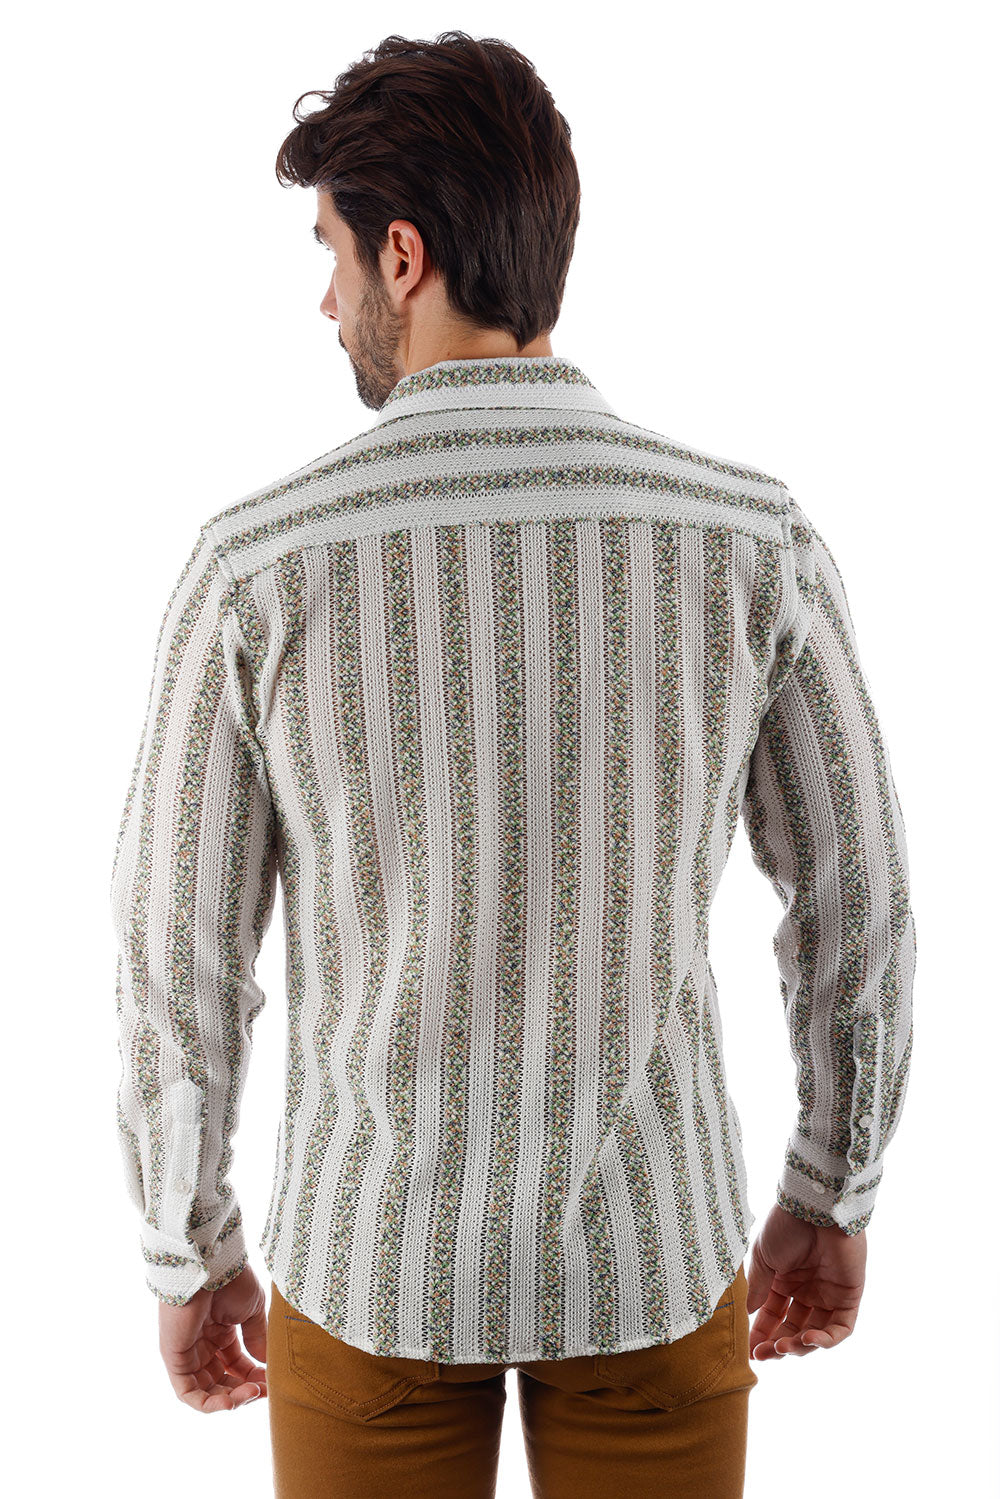 BARABAS Men's Knitted Fabric Button Down Long Sleeve Shirt 4B42 White Green